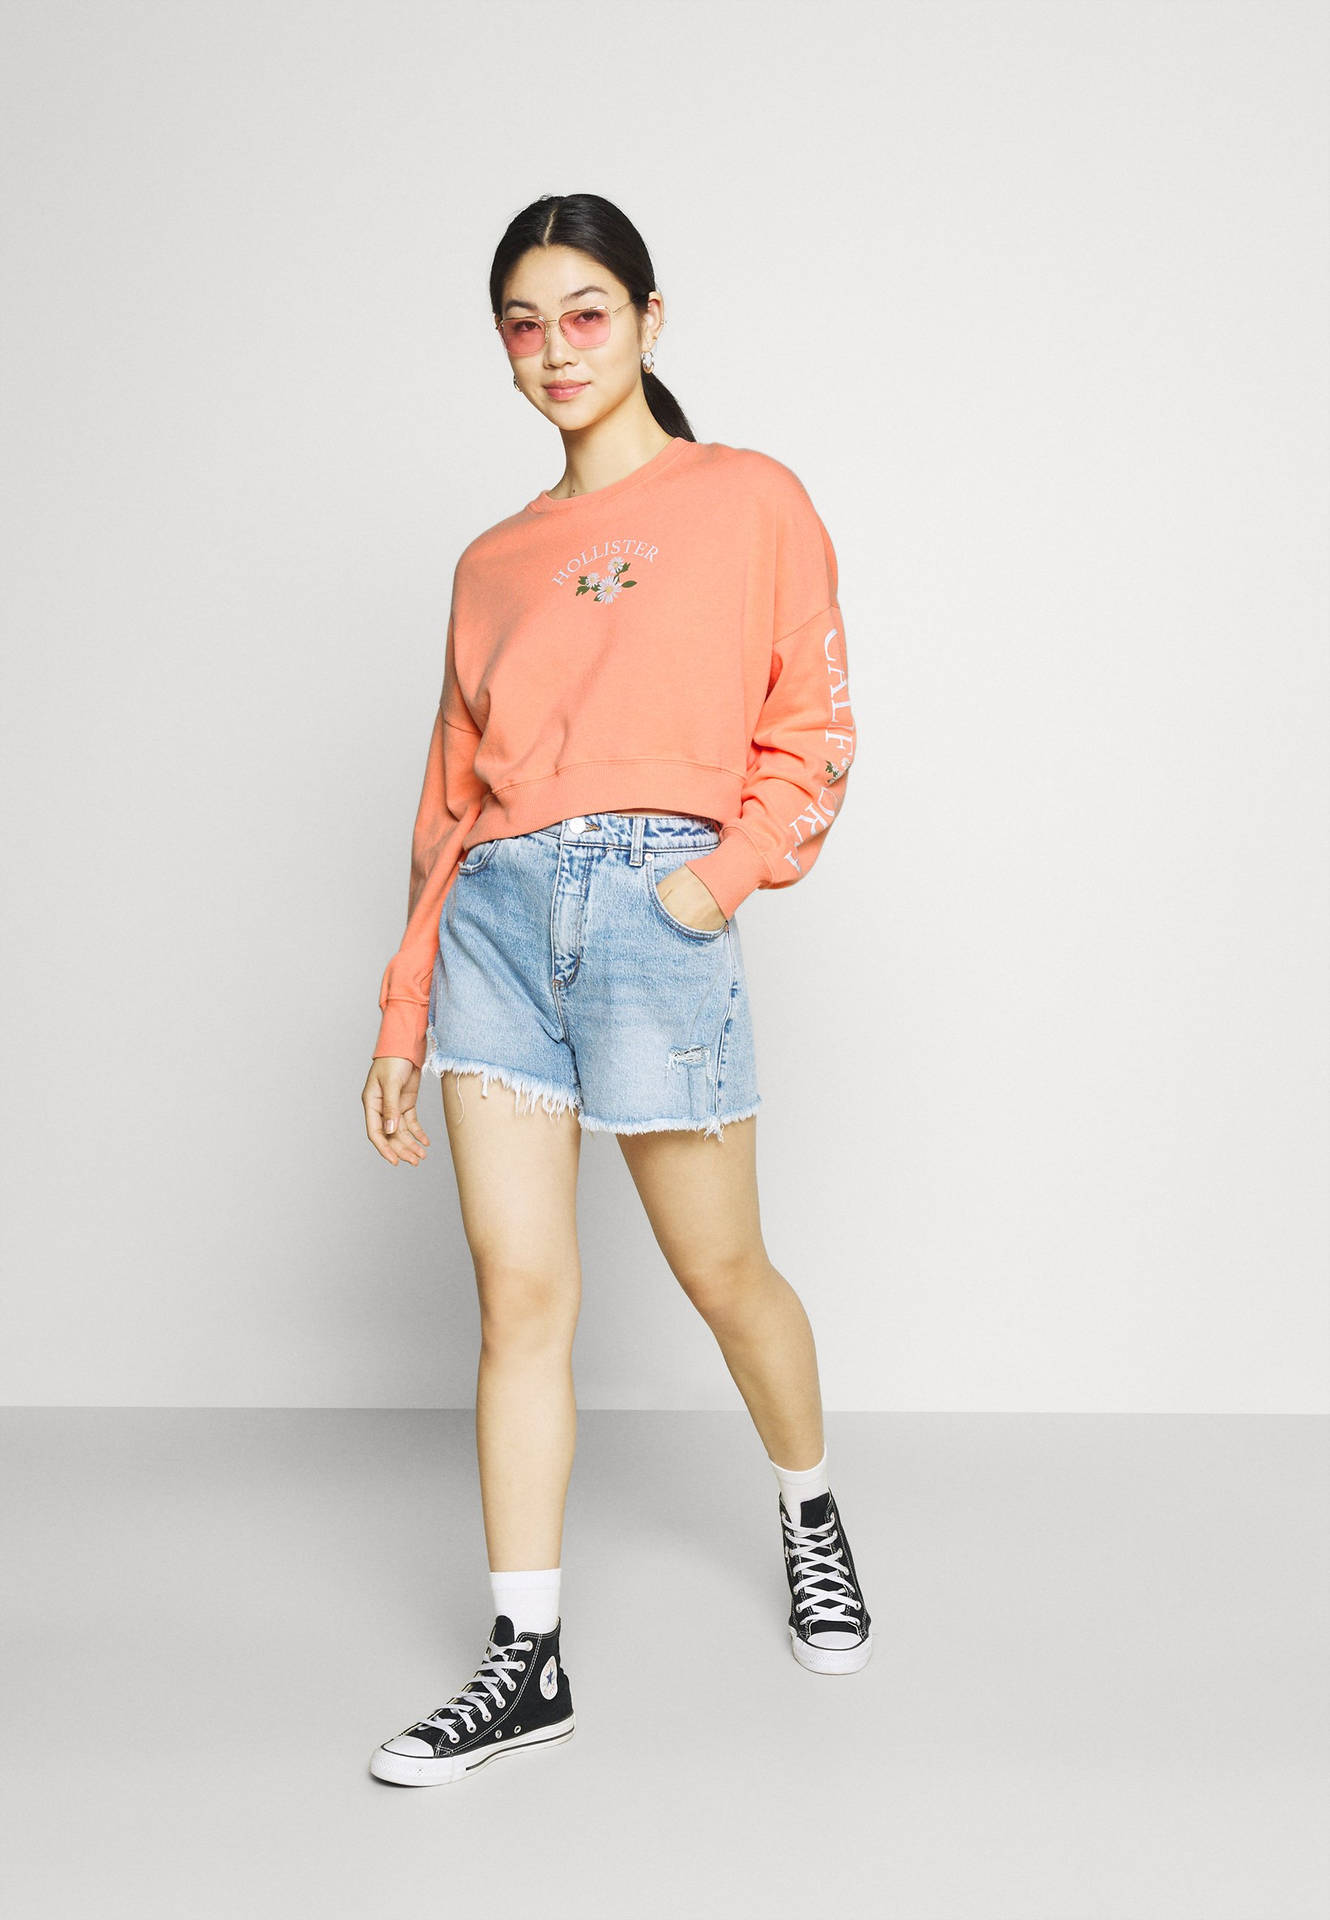 Model In Peach Hollister Sweatshirt Background